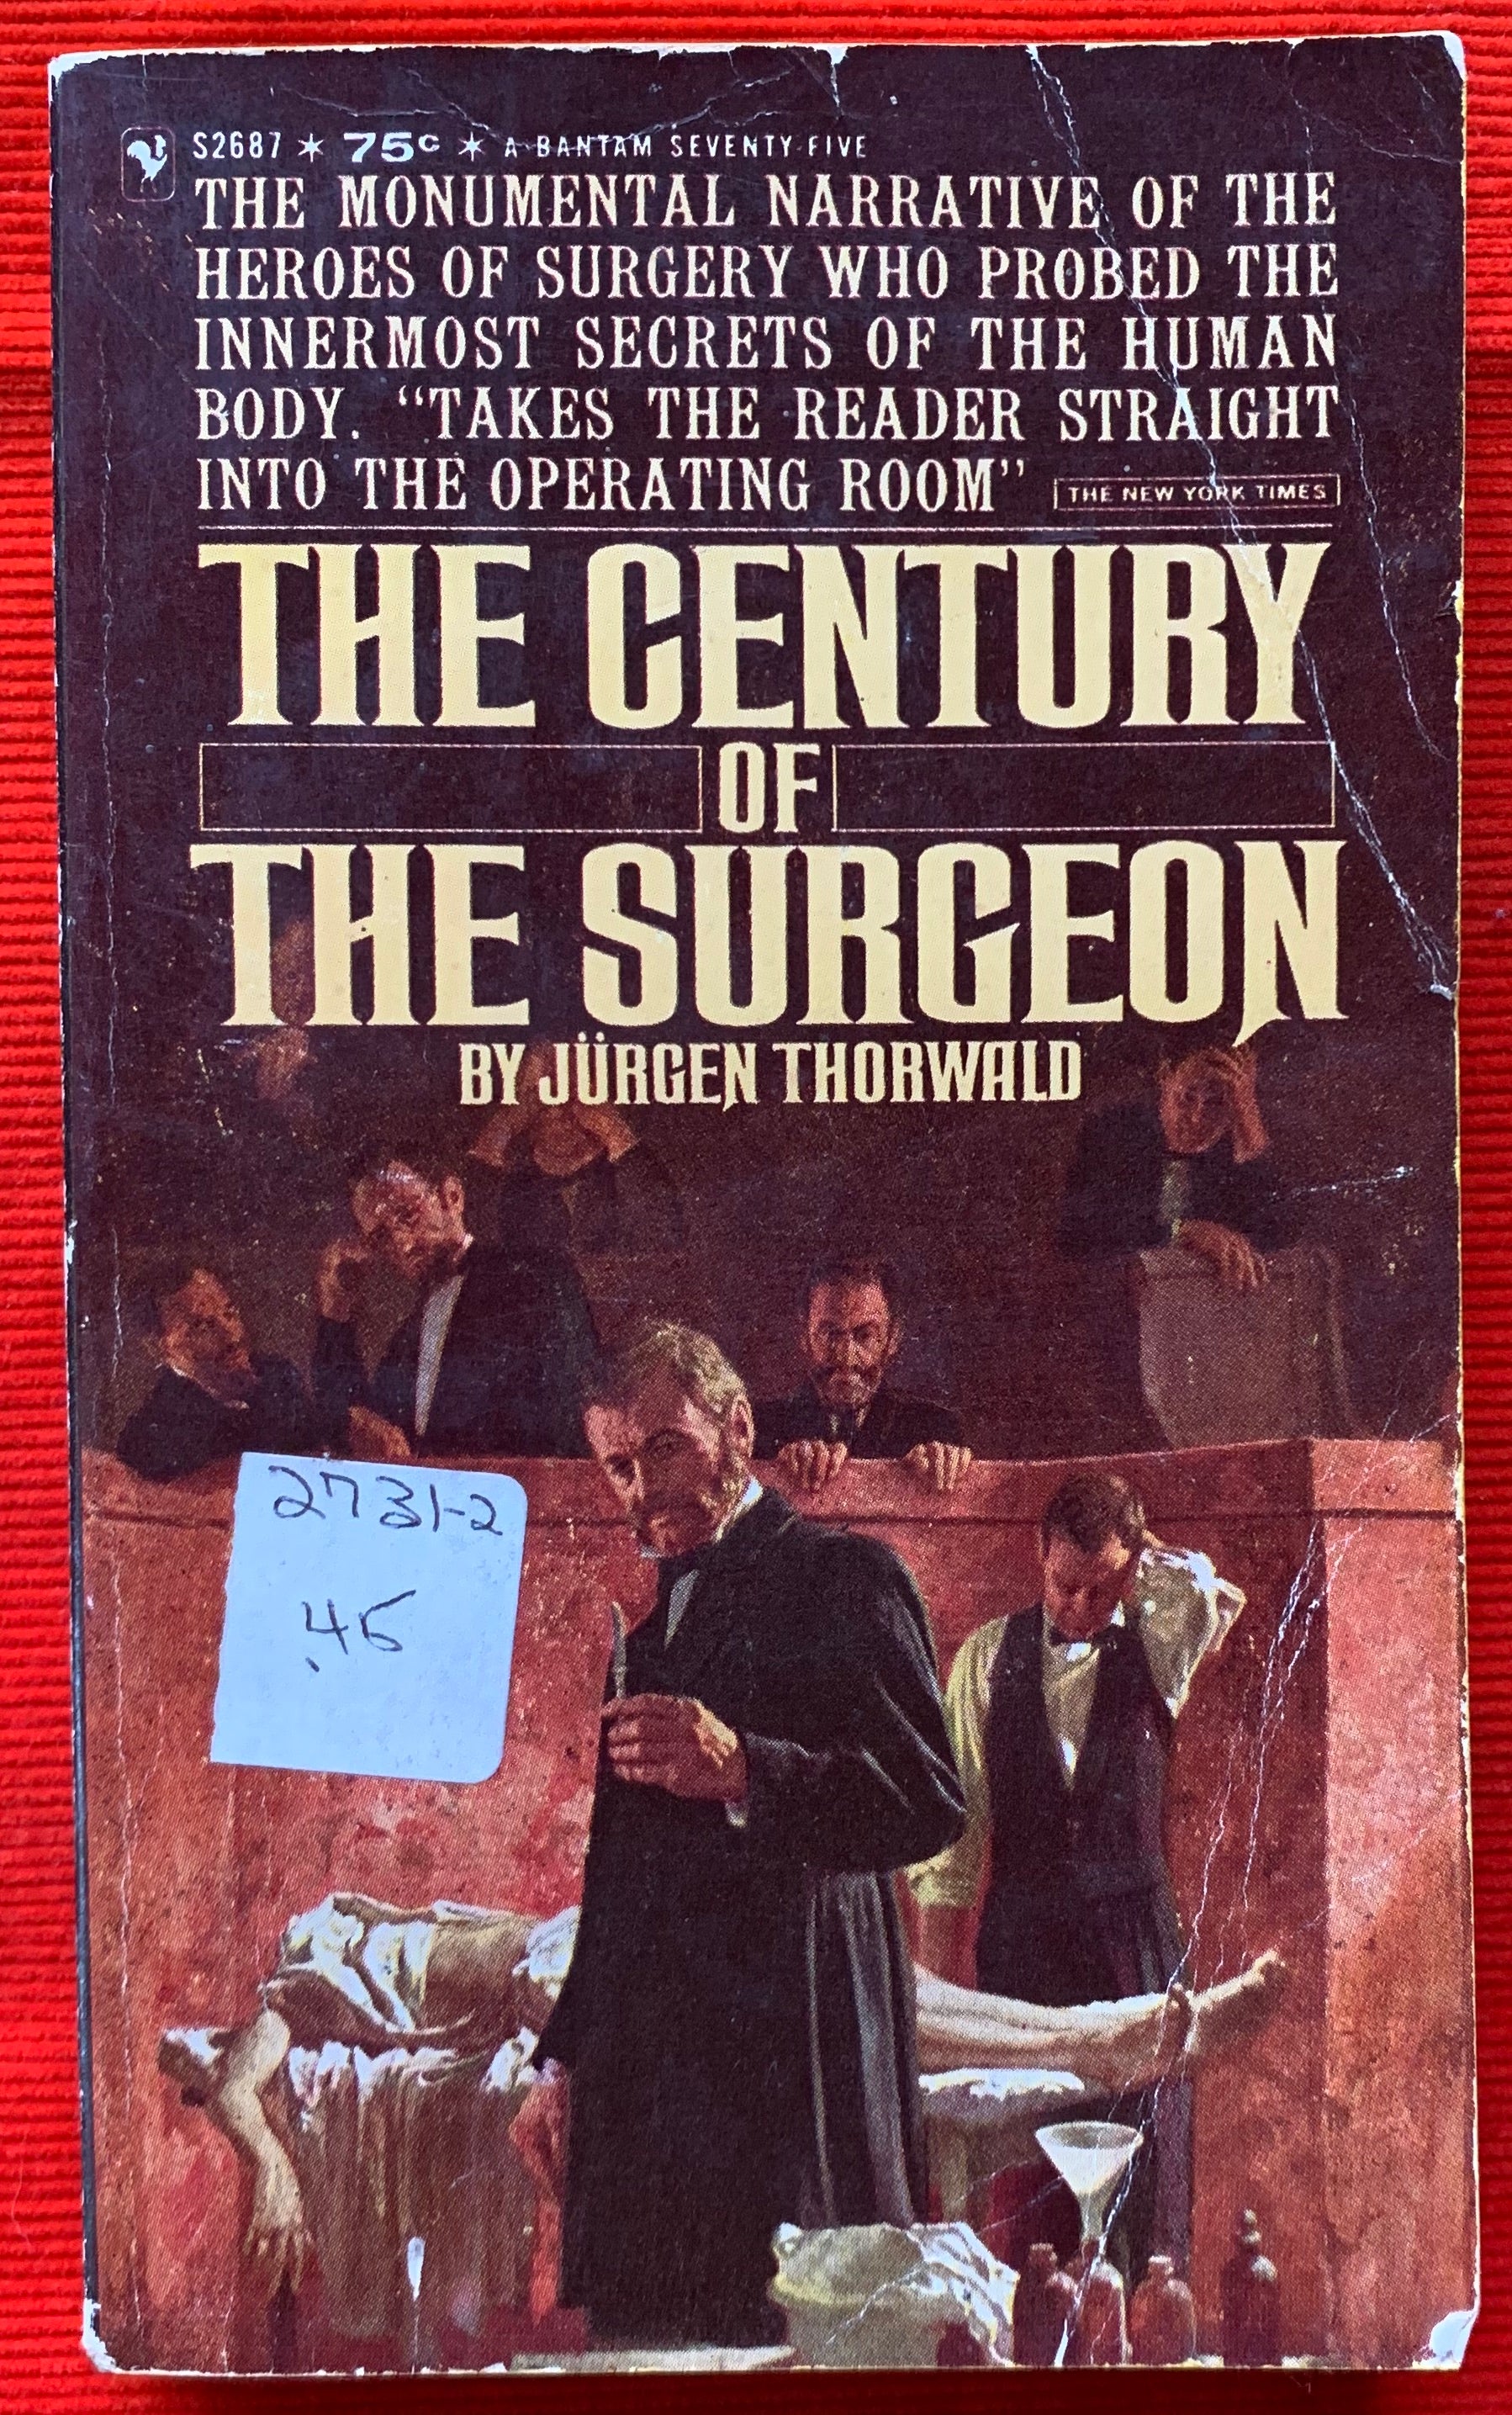 "The Century of the Surgeon" By Jurgen Thorwald